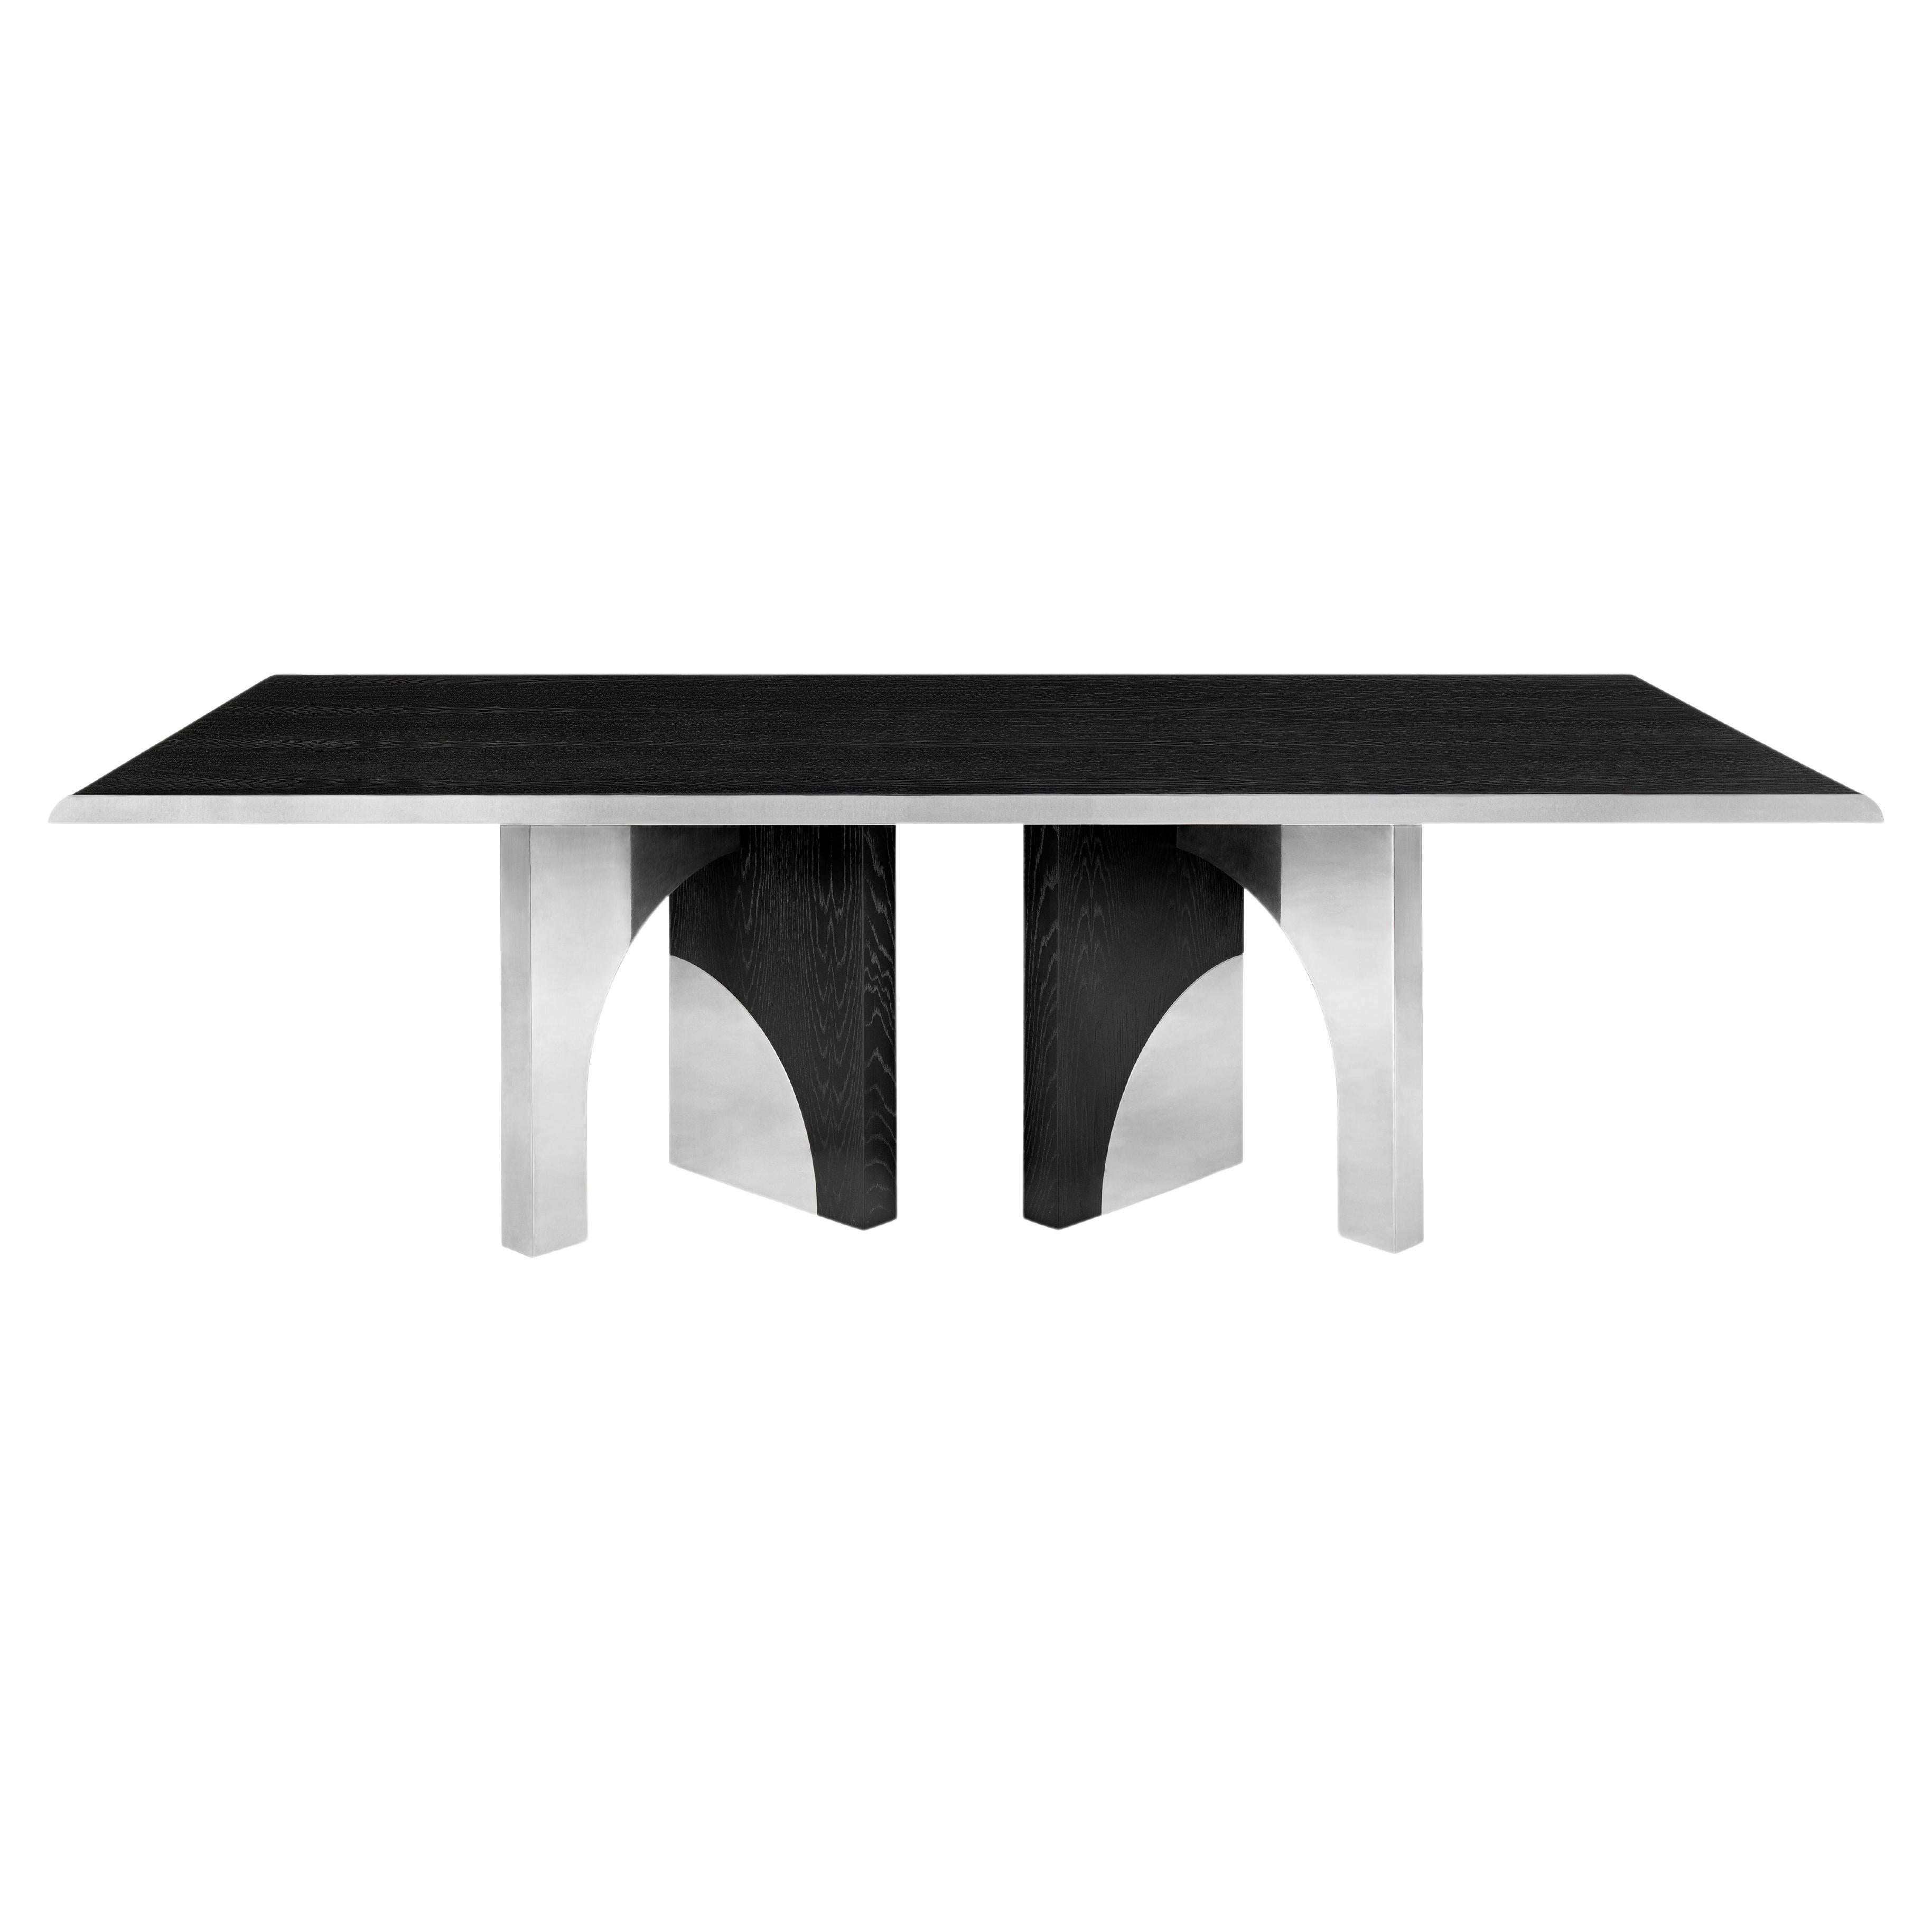 Utopia Dining Table, Dark Oak and Steel, InsidherLand by Joana Santos Barbosa